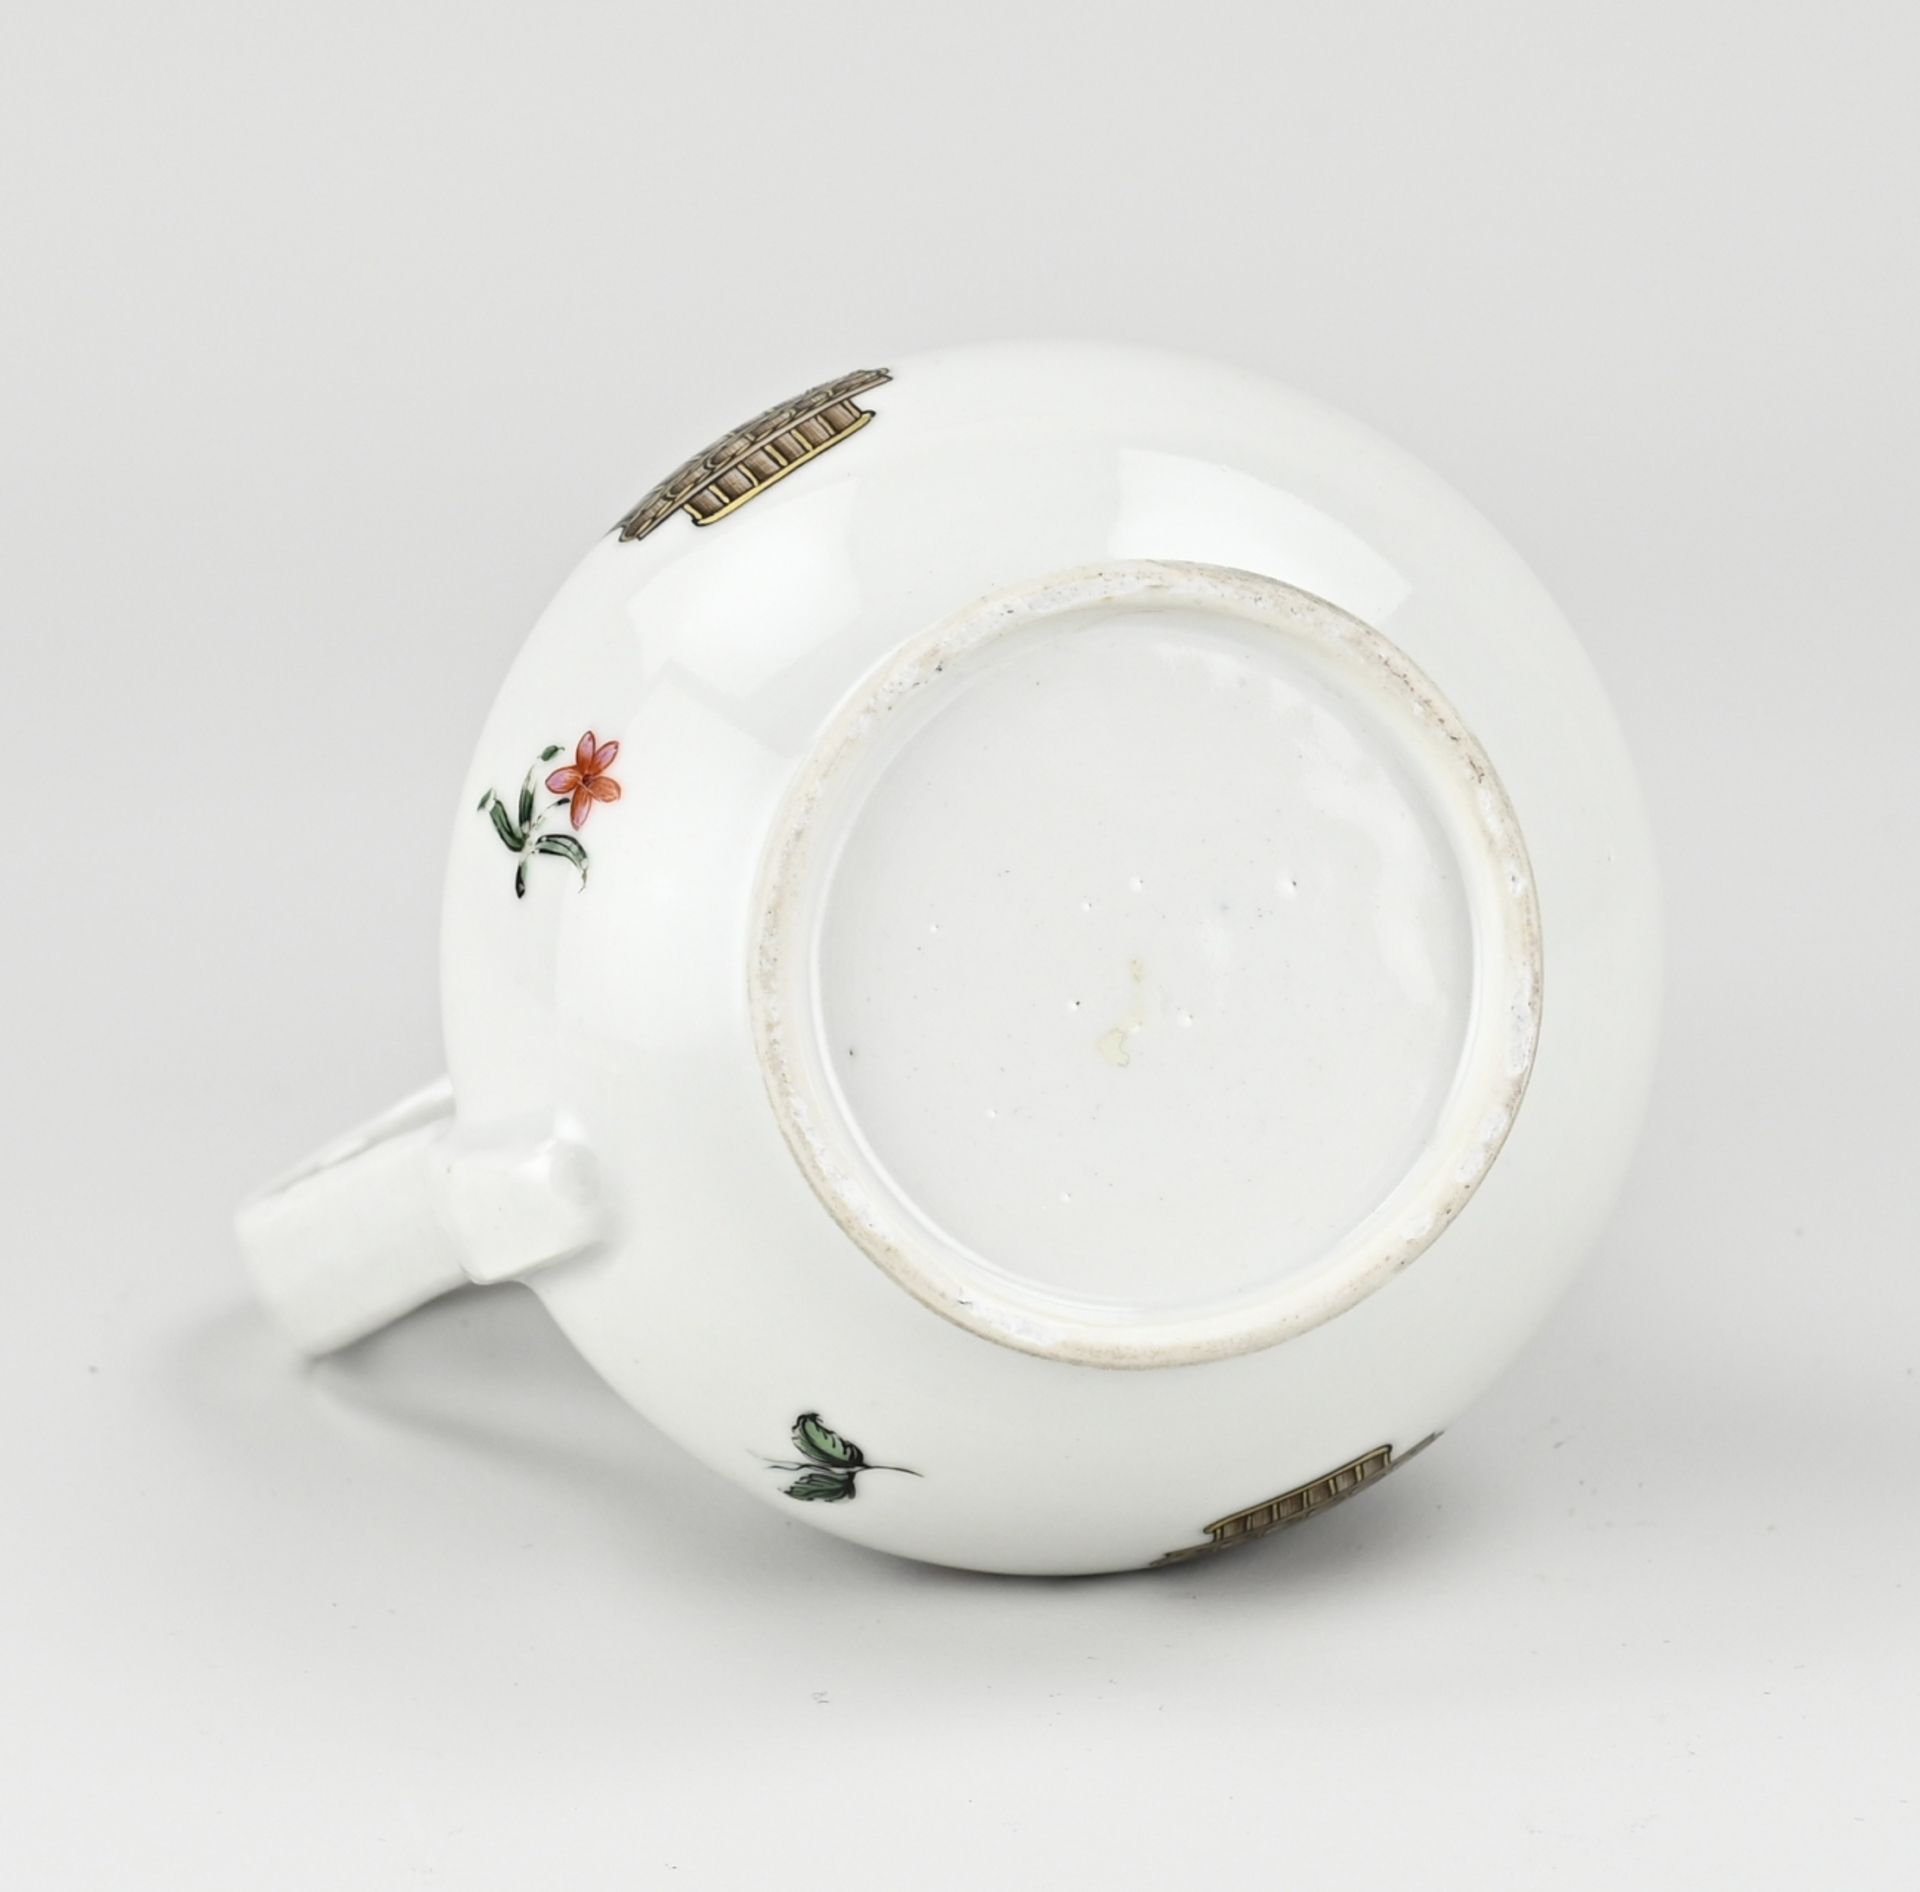 Chinese jug, H 13 cm. - Image 3 of 3